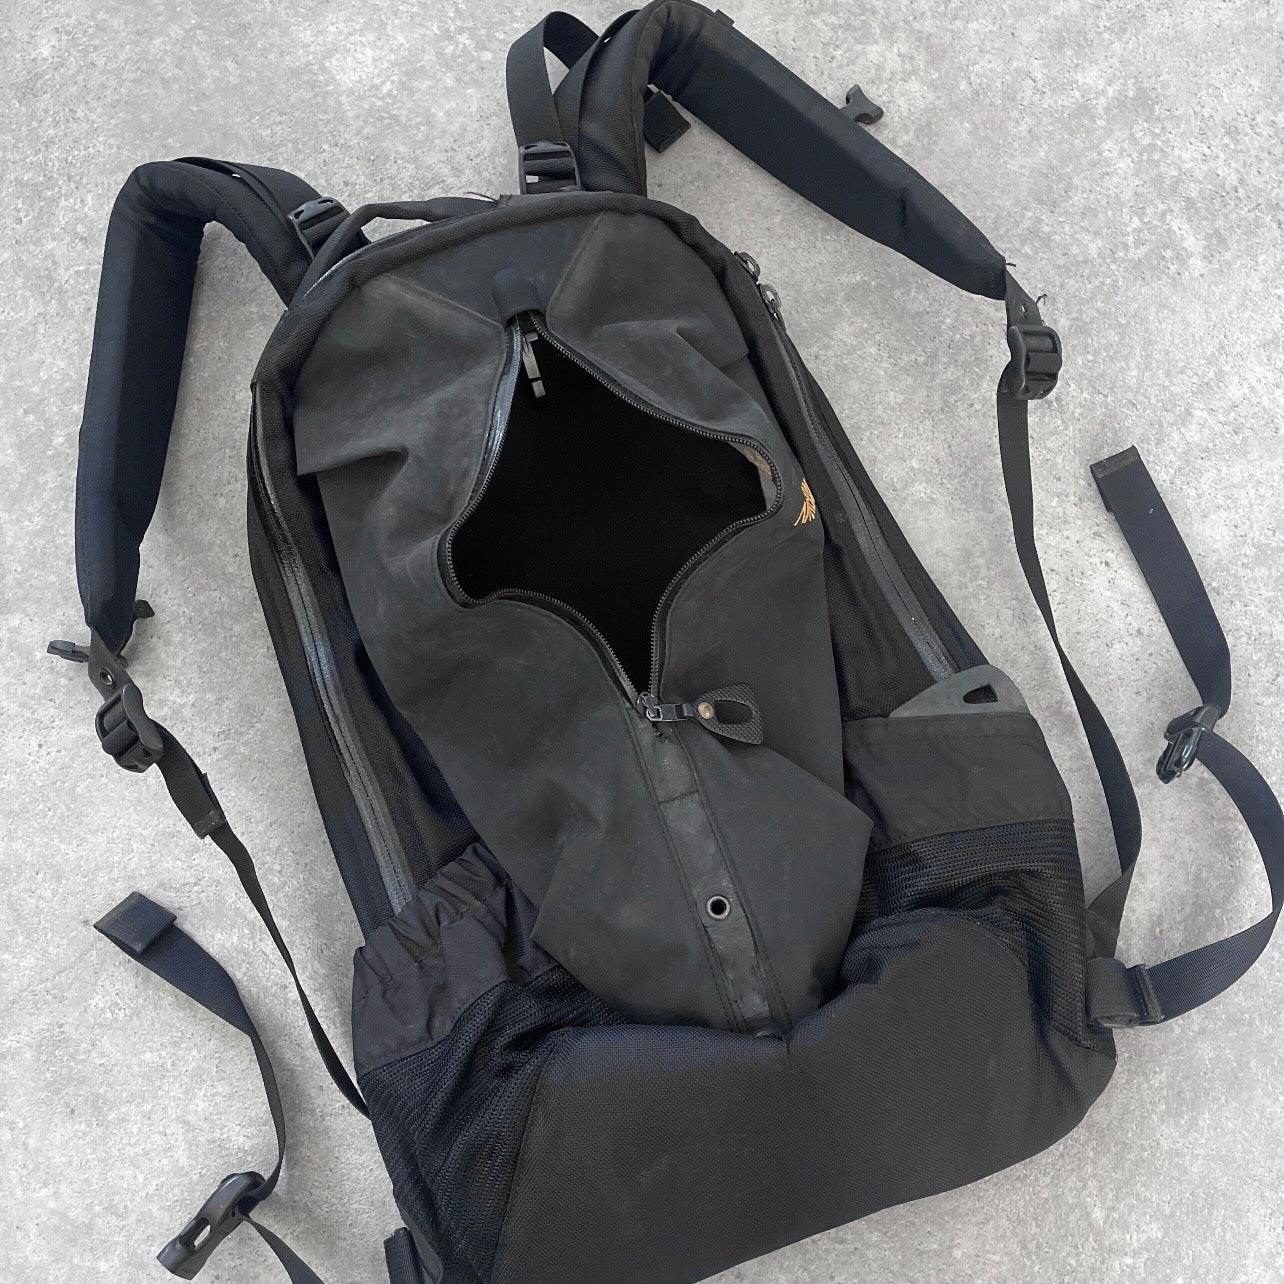 Arc’teryx Arro 22 backpack (20”x12”x8”) - Known Source